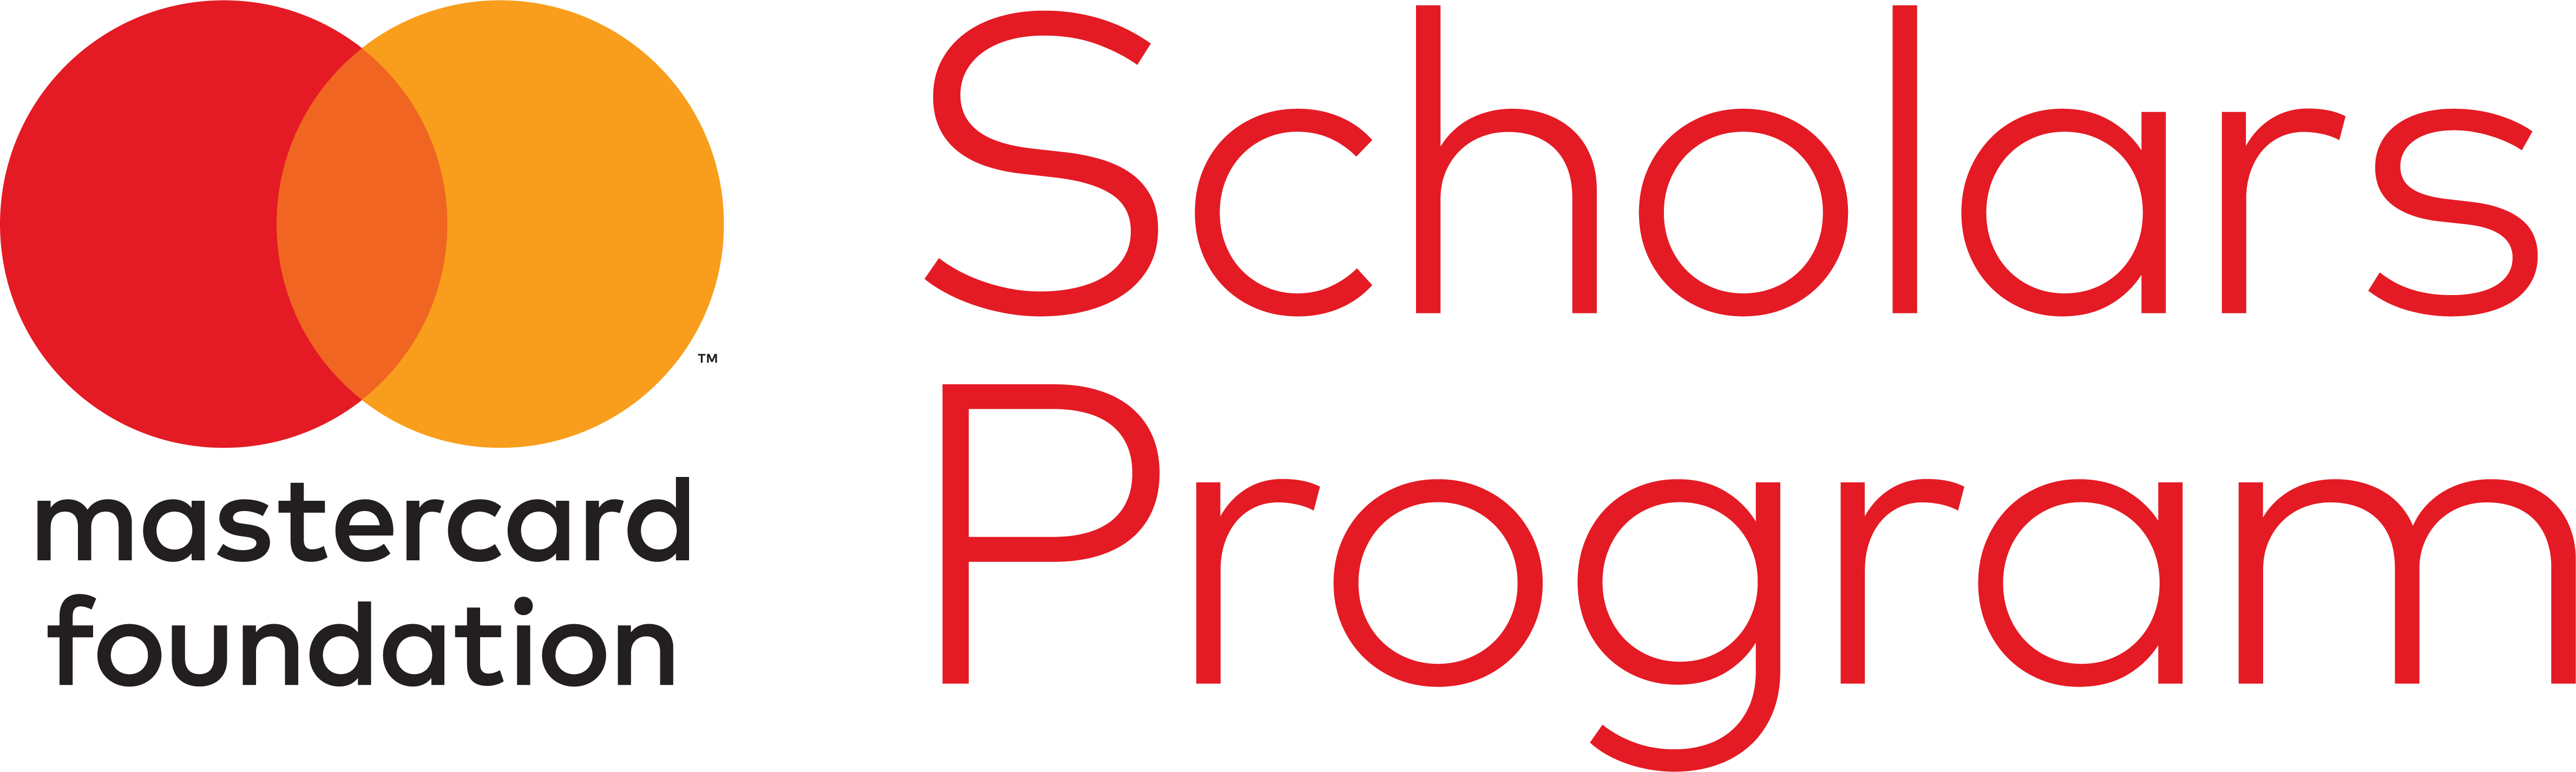 the mastercard foundation scholars program 2021 6 SCHOLARSHIP APPLICATION GUIDE FOR ADAMAWA